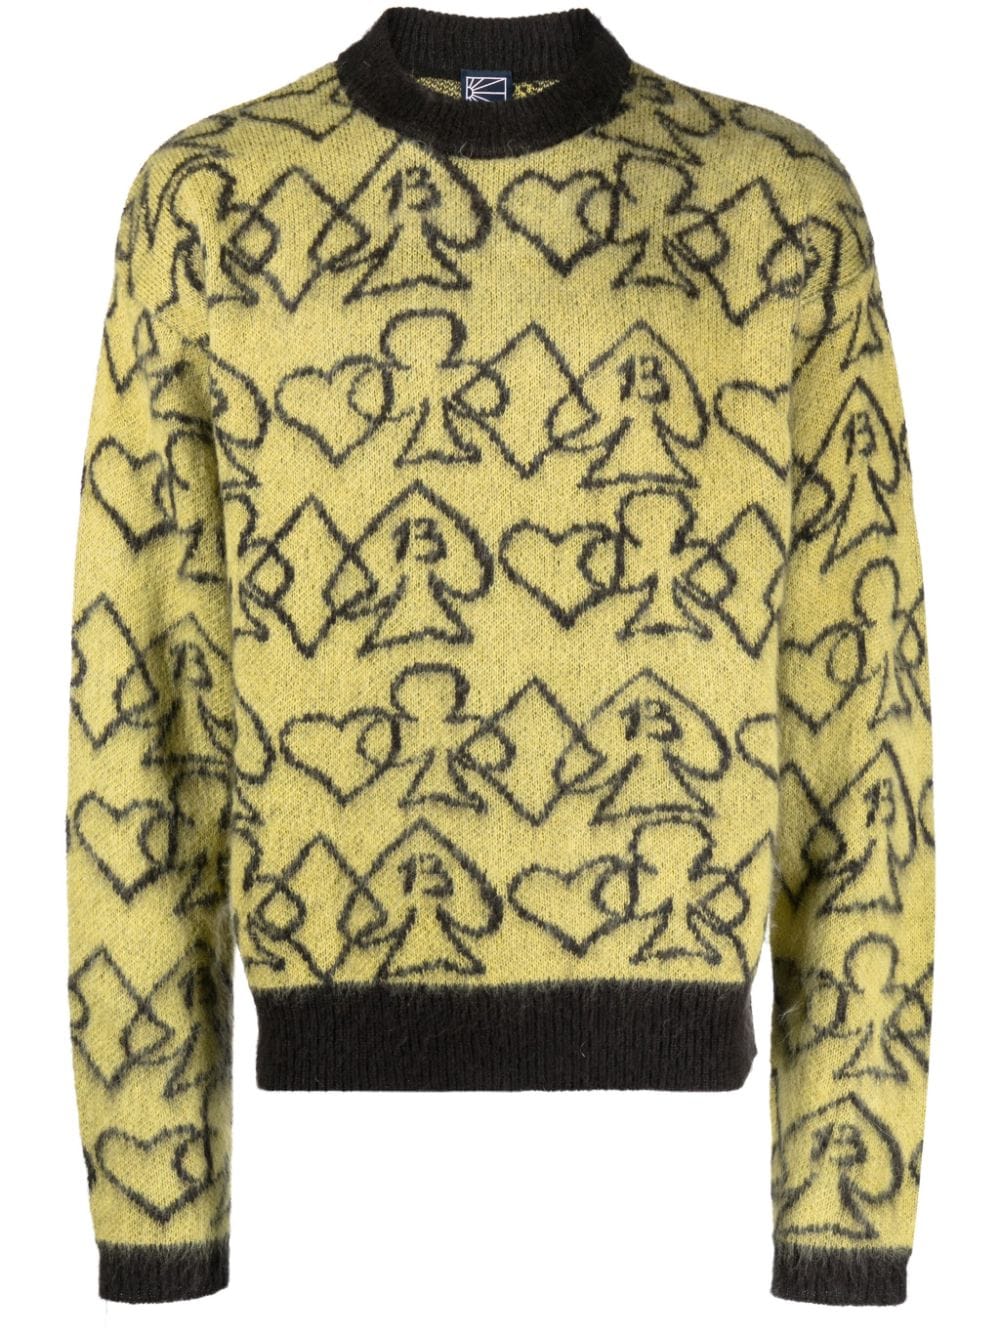 Louis Vuitton Monogram Logo Black and Yellow Knit Sweater Dress